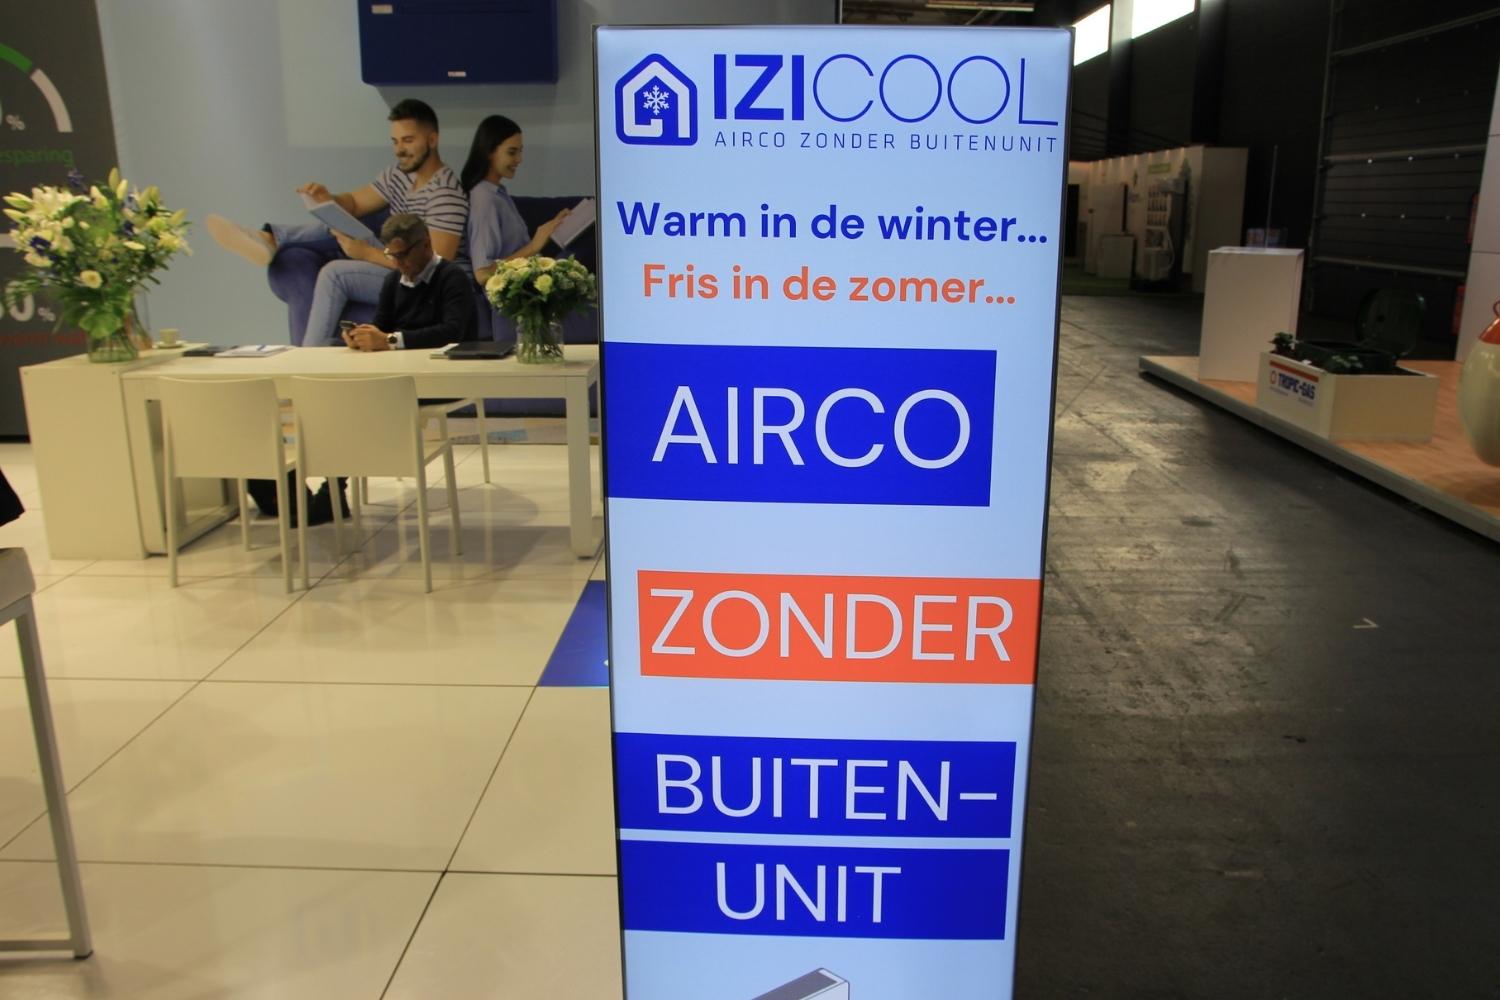 IZI Cool airco zonder buitenunit prijs kopen